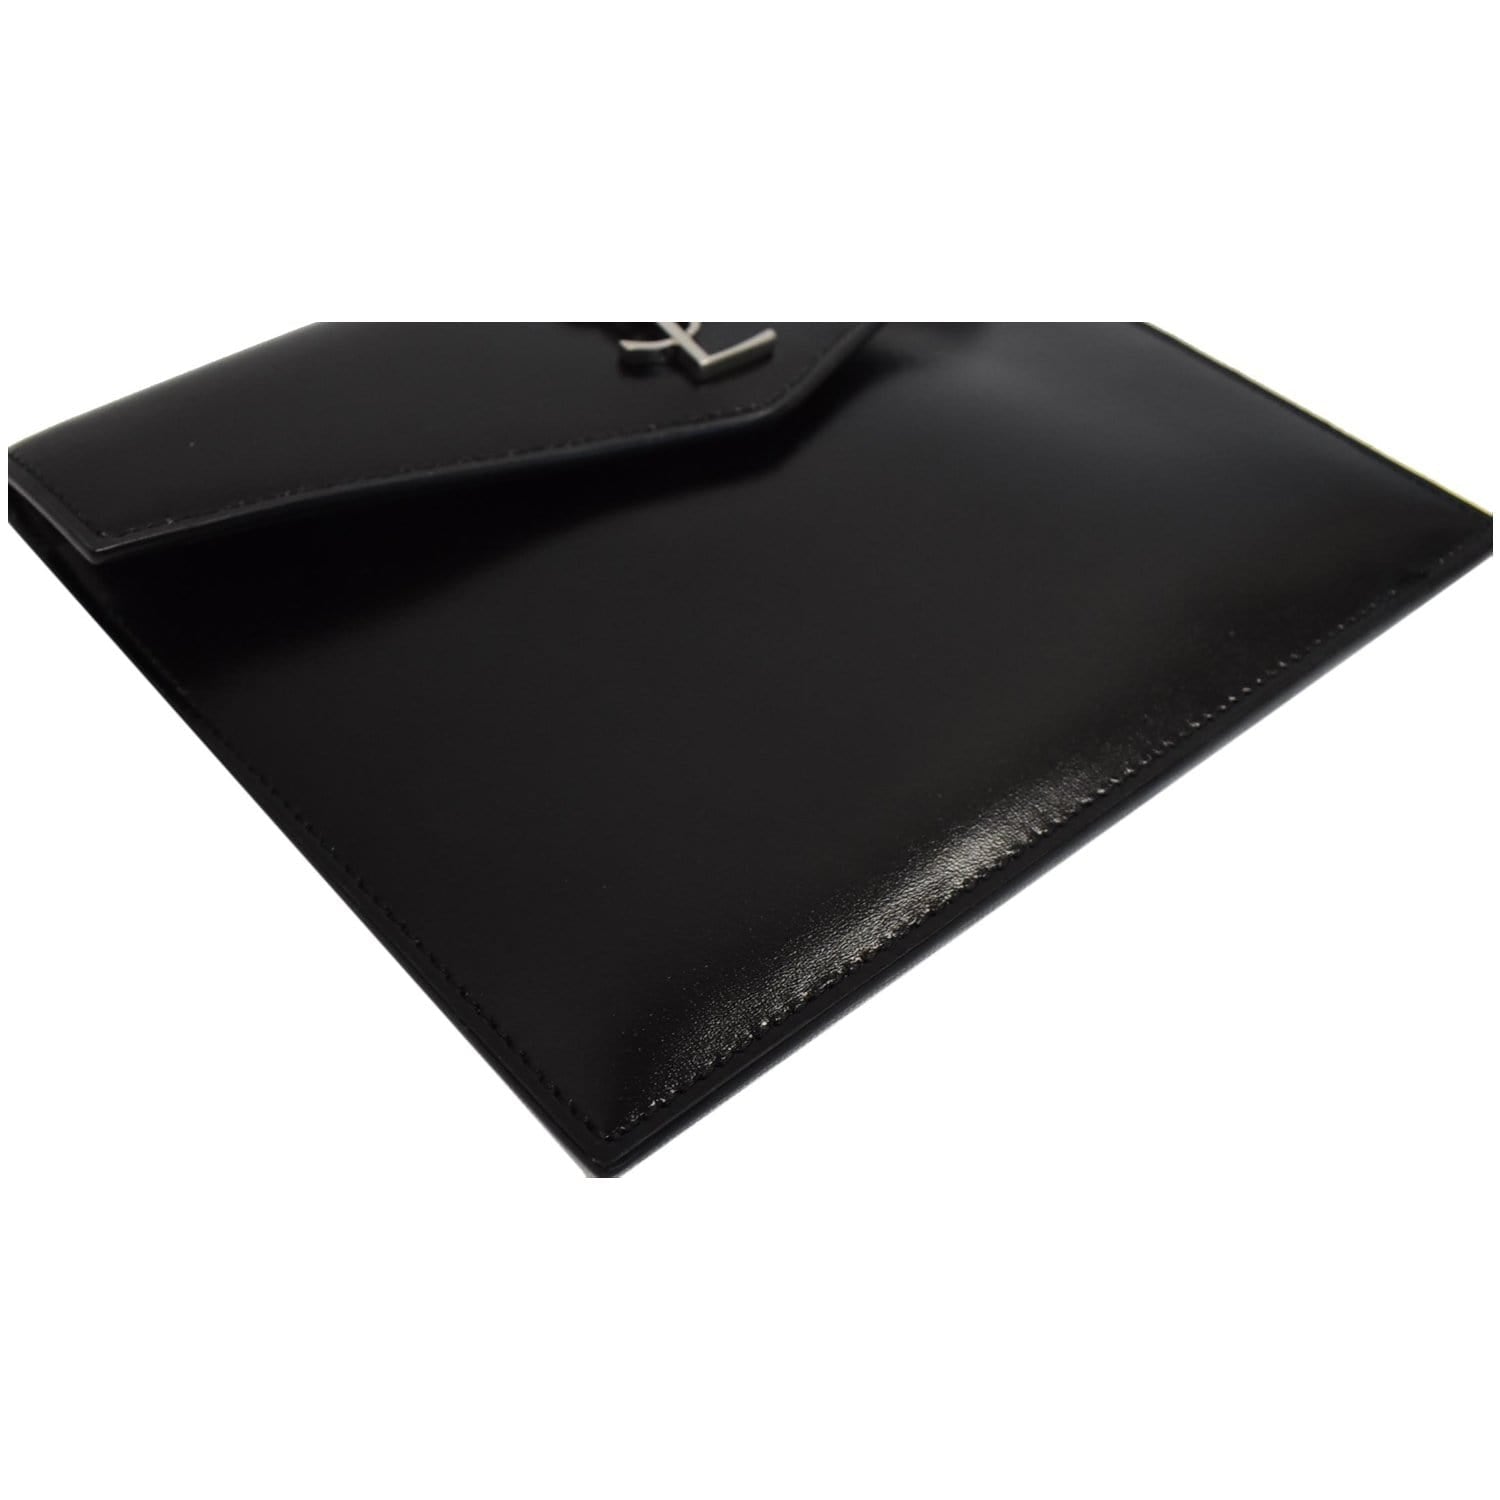 Saint Laurent Uptown Calfskin Leather Envelope Clutch - Black Noir